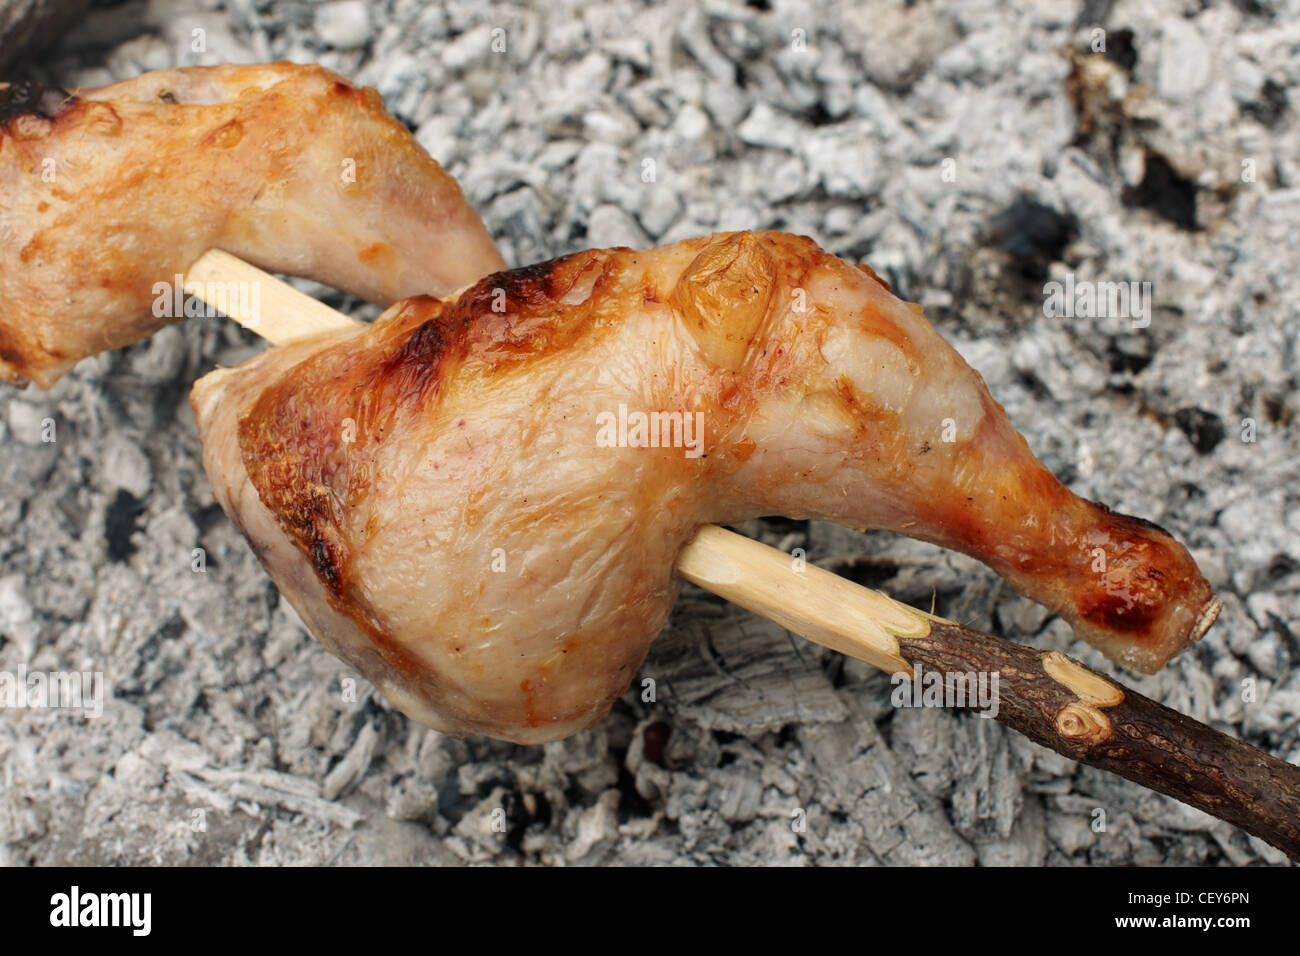 https://c8.alamy.com/comp/CEY6PN/roasting-chicken-rounds-on-open-fire-CEY6PN.jpg